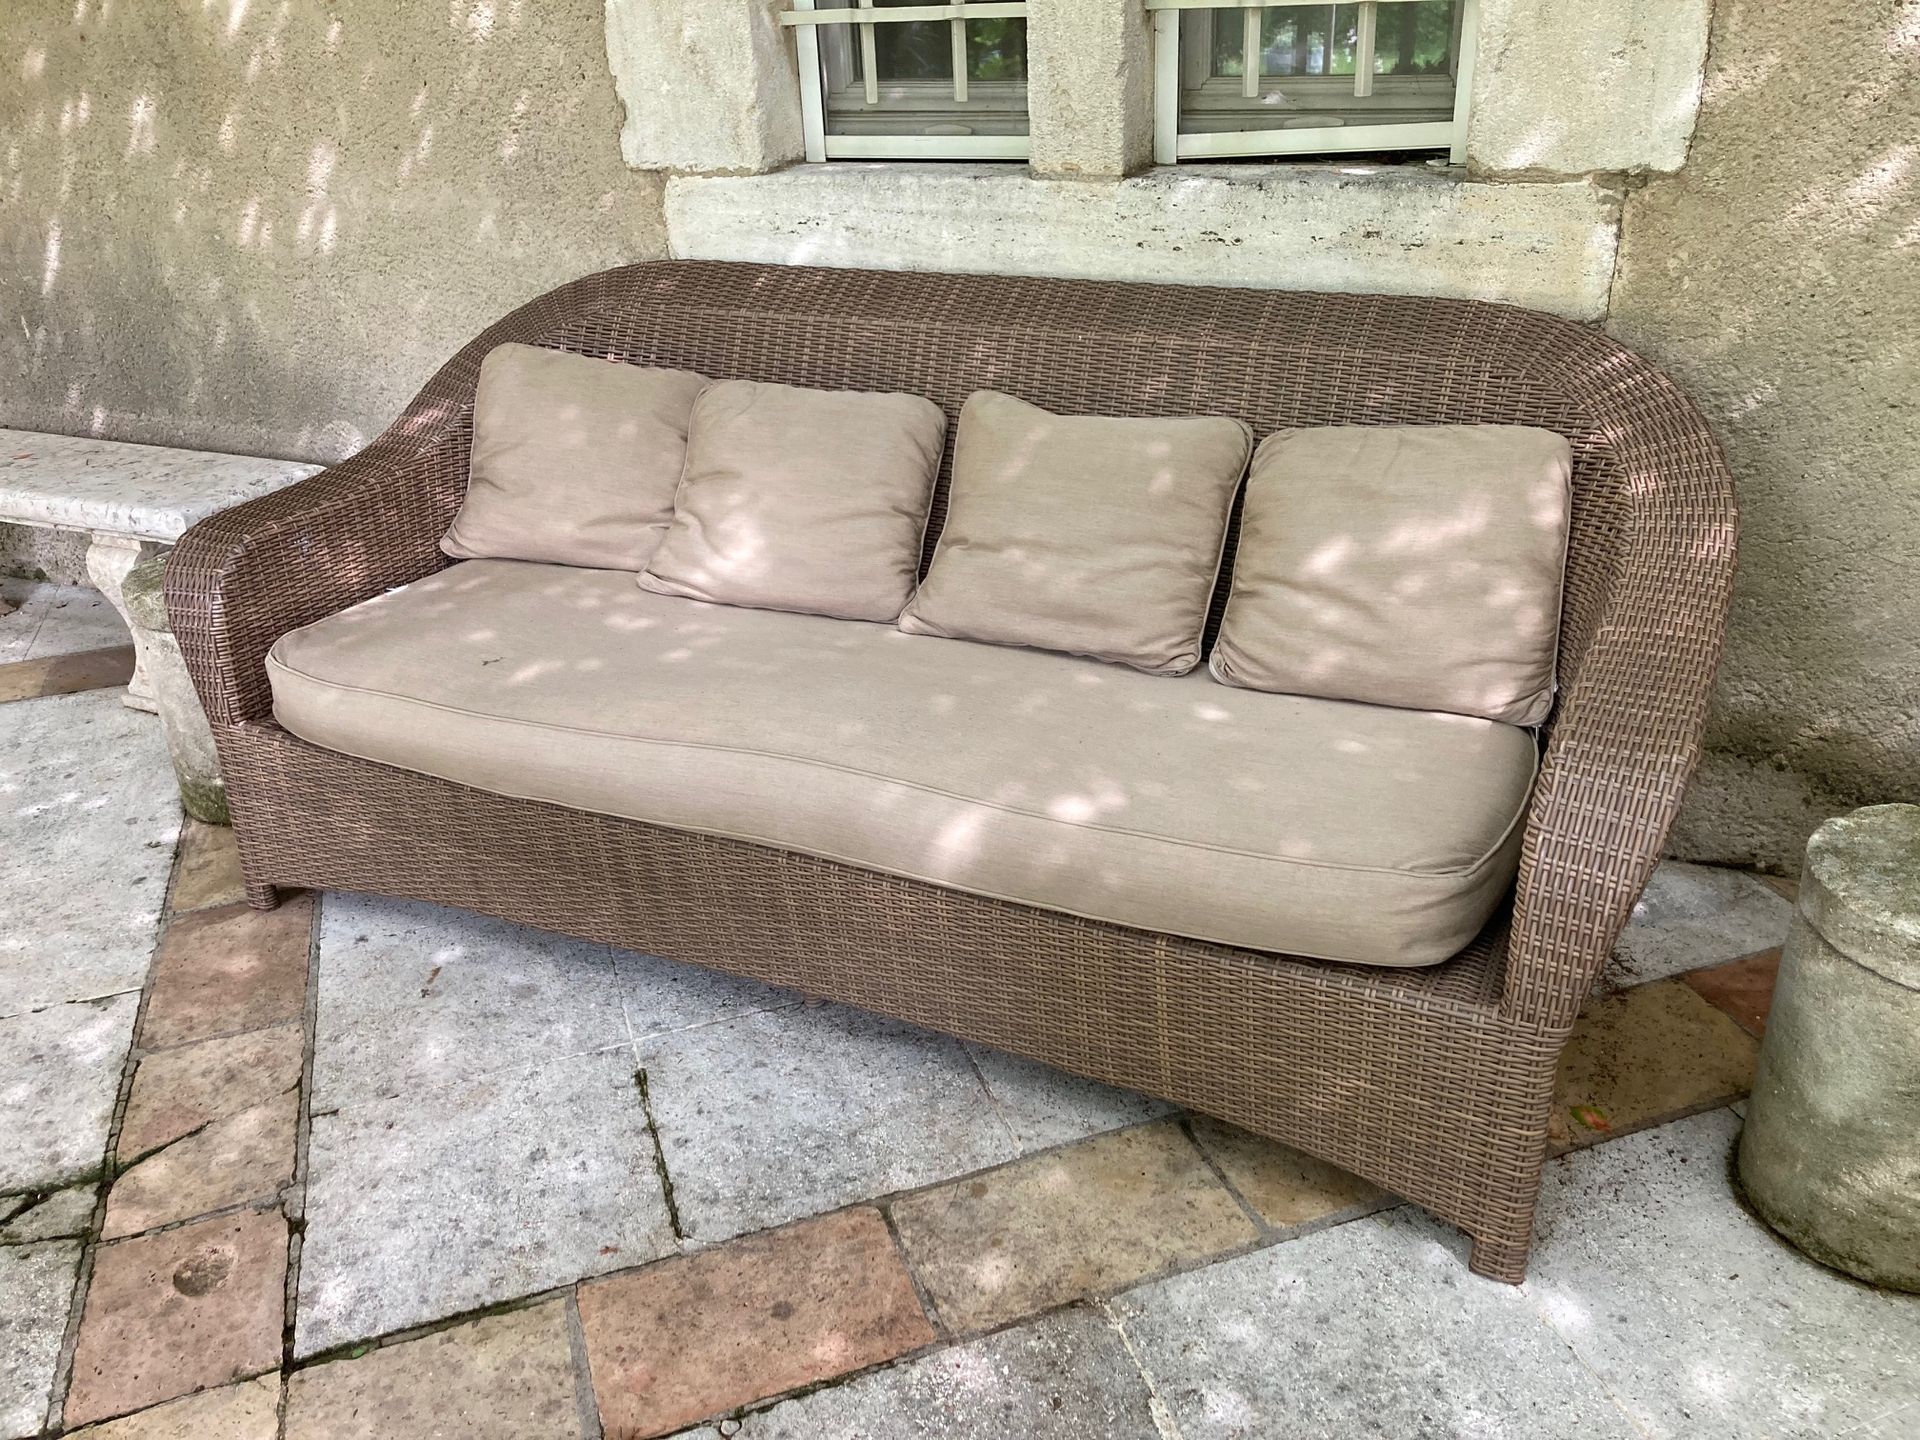 Null Sofa in woven plastic fiber
H. 82 W. 207 D. 80 cm